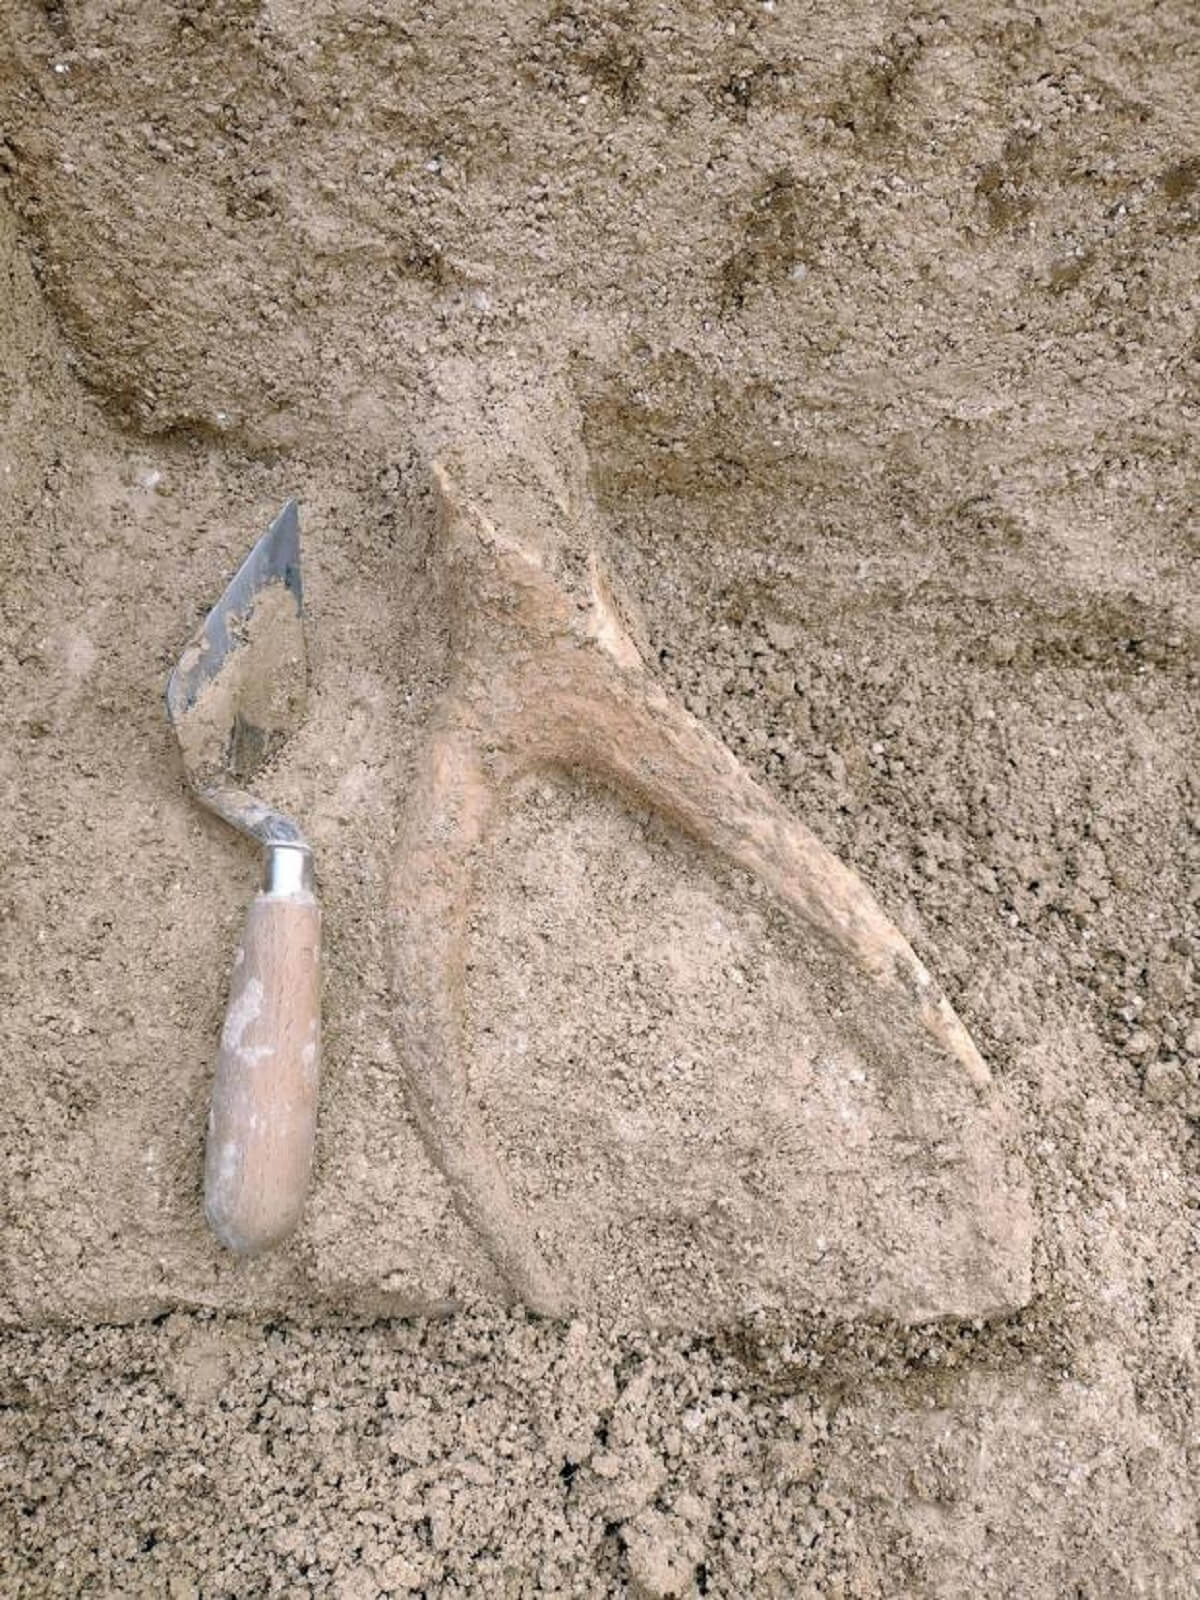 Increíbles hallazgos arqueológicos datados en 10,000 a.C. desenterrados a solo 8 millas de Stonehenge - Stonehenge